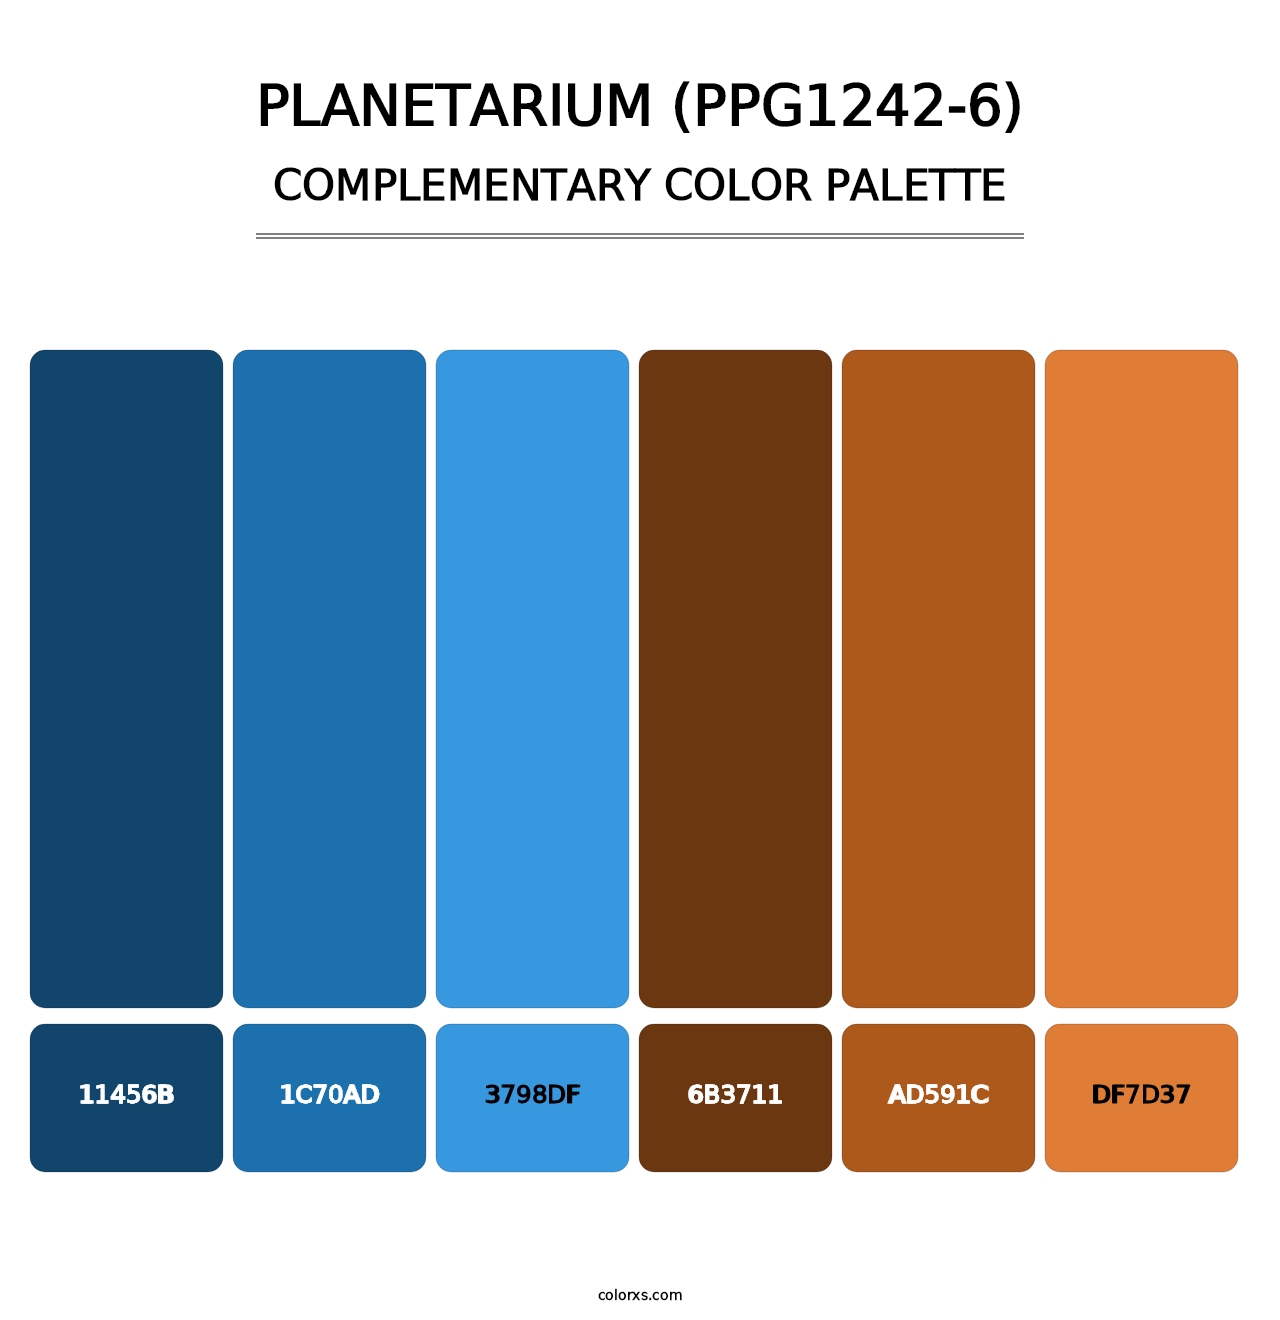 Planetarium (PPG1242-6) - Complementary Color Palette